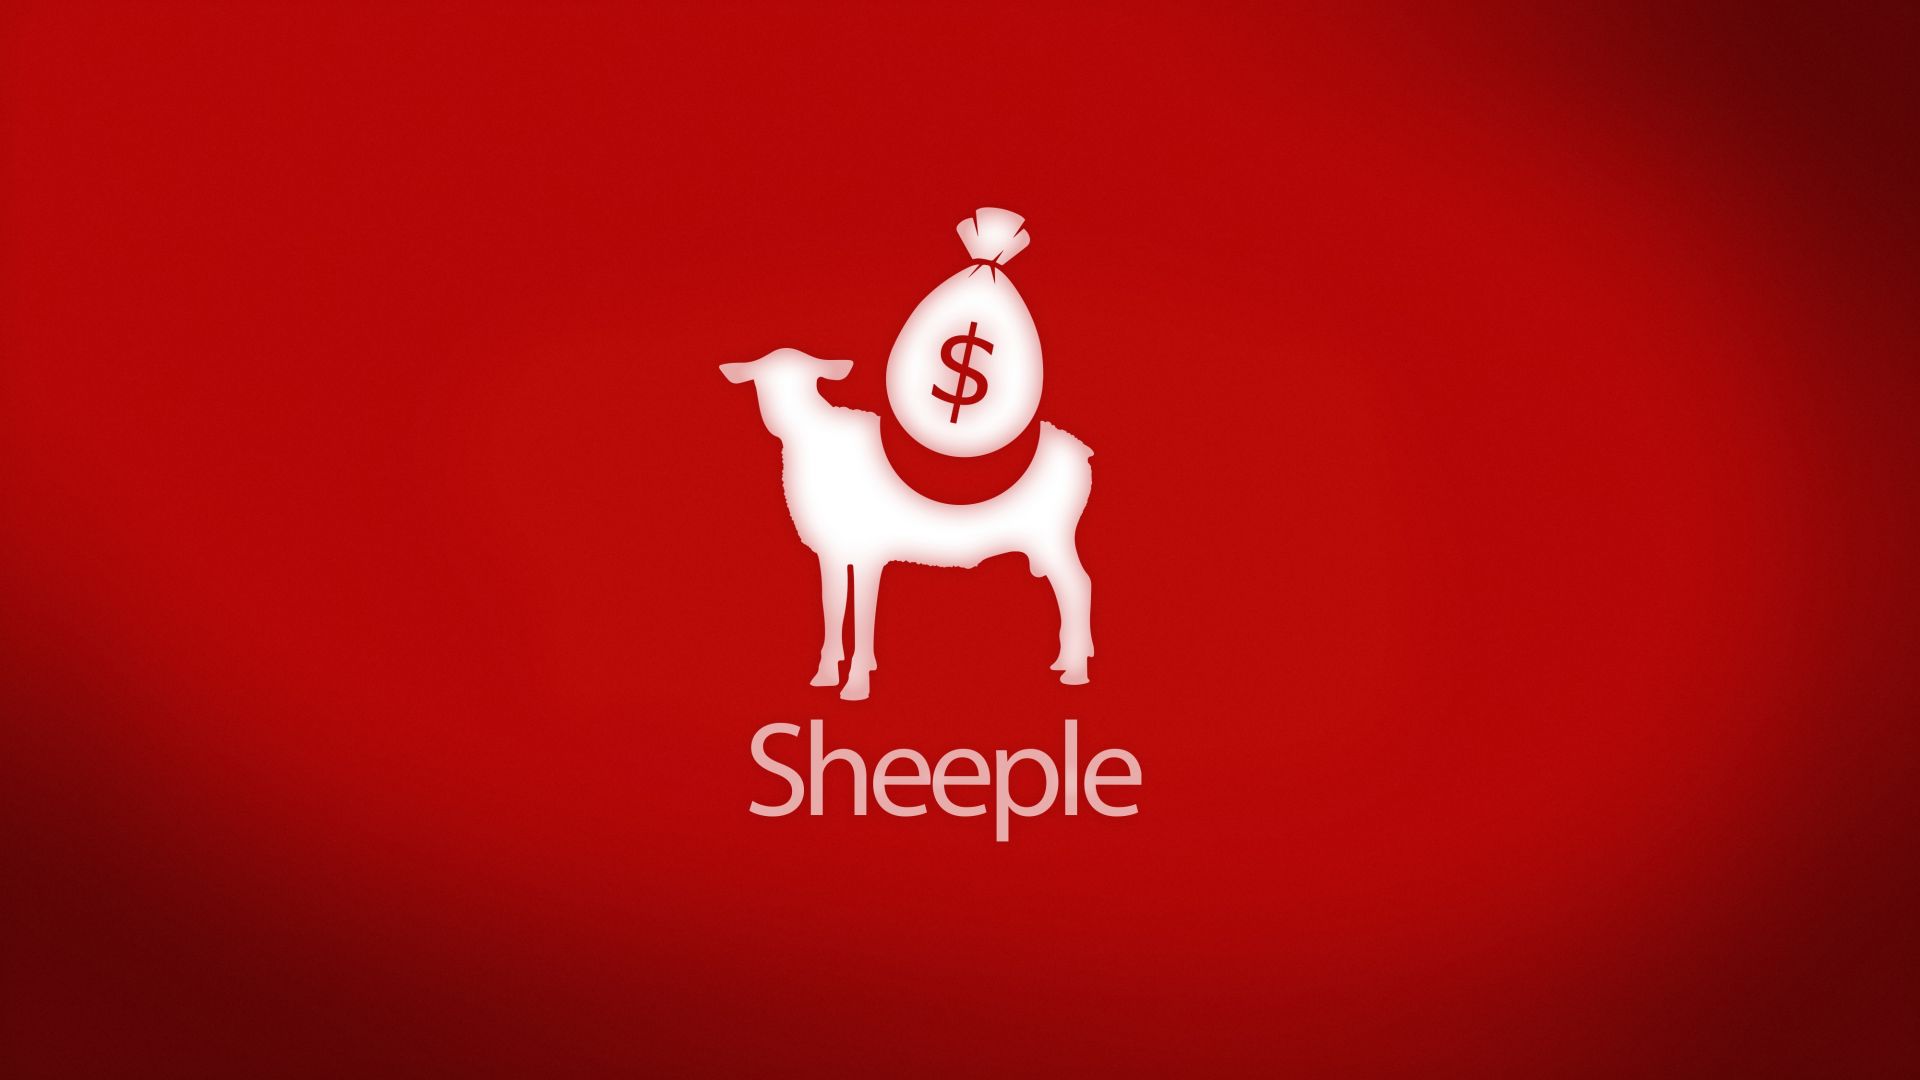 Wallpaper Sheeple, sheep, money, red, humor, abstract